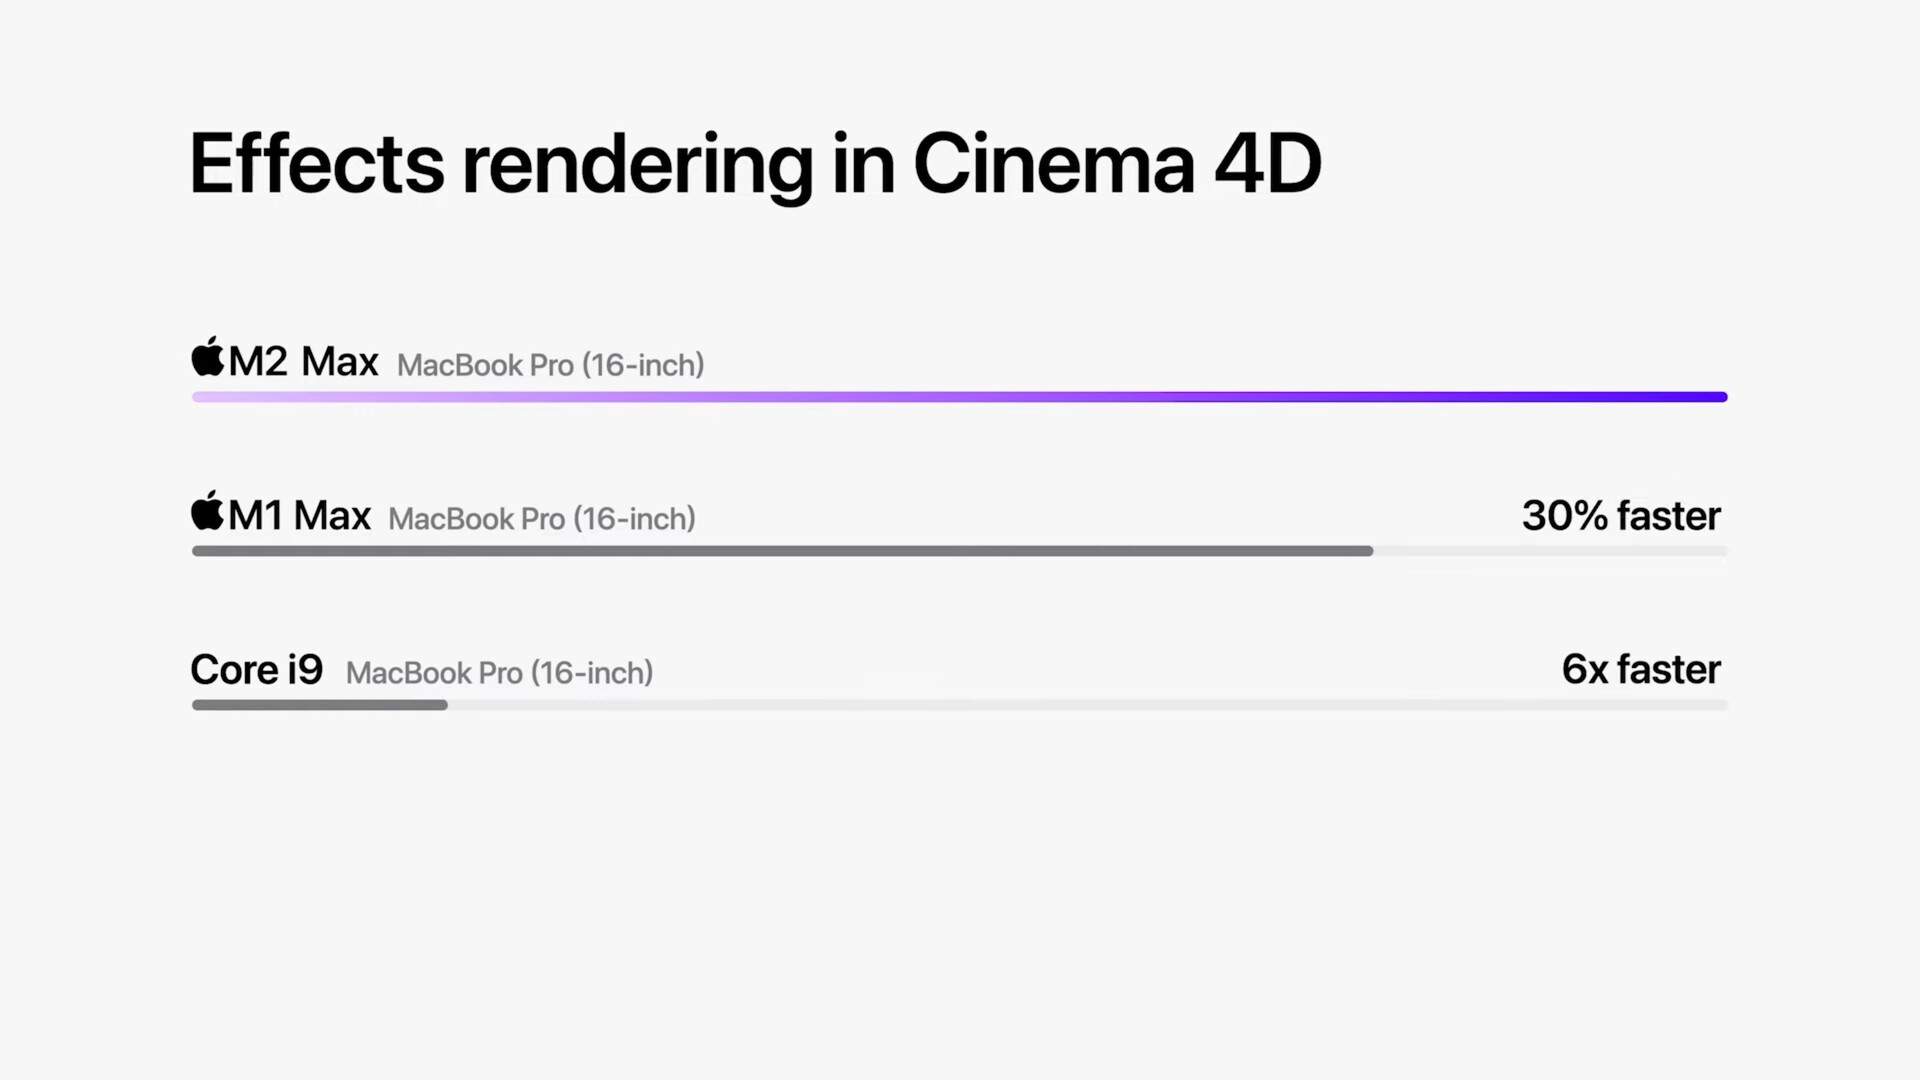 Effect rendering in Cinema 4D